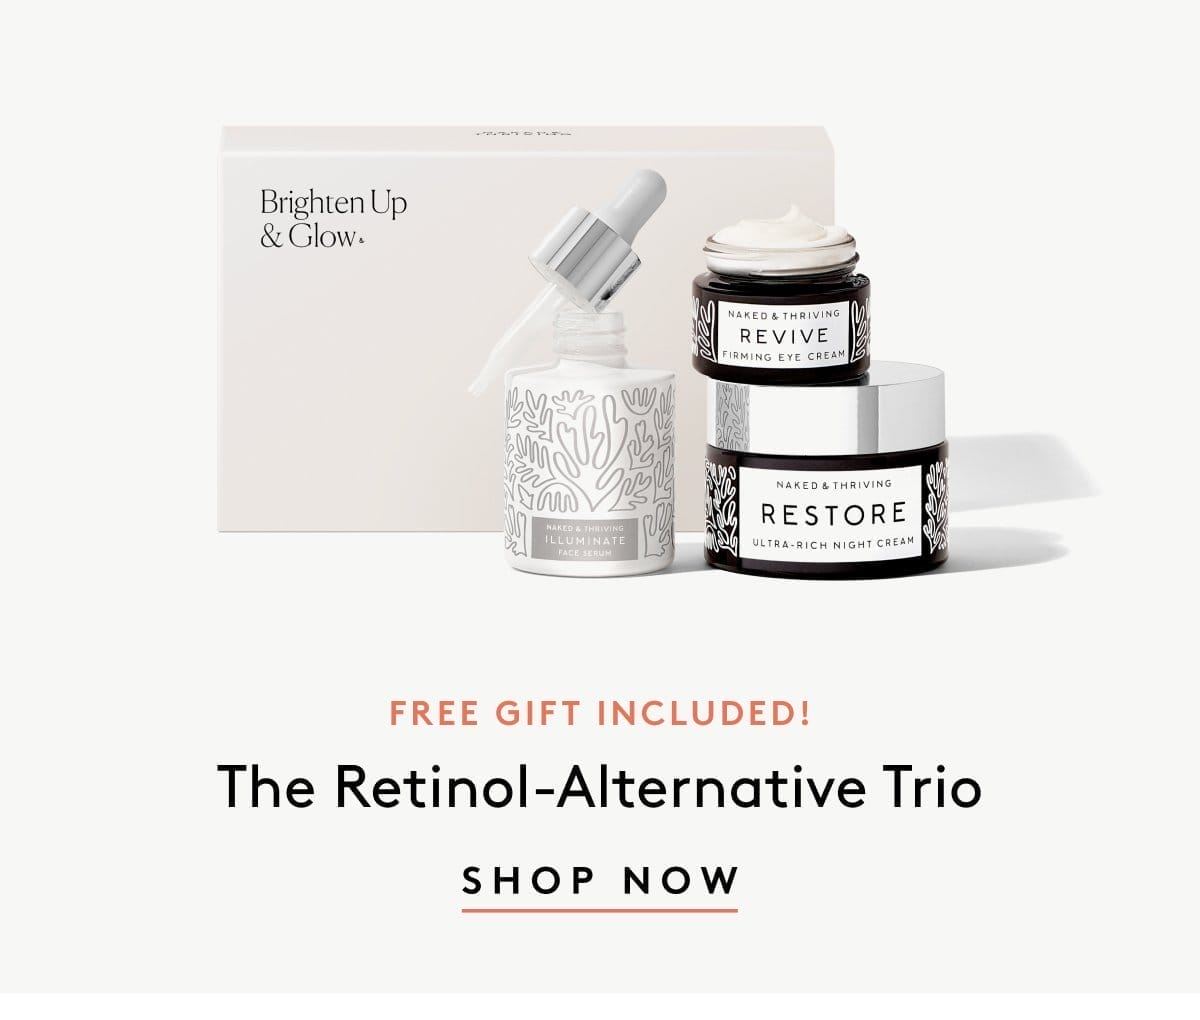 The Retinol-Alternative Trio